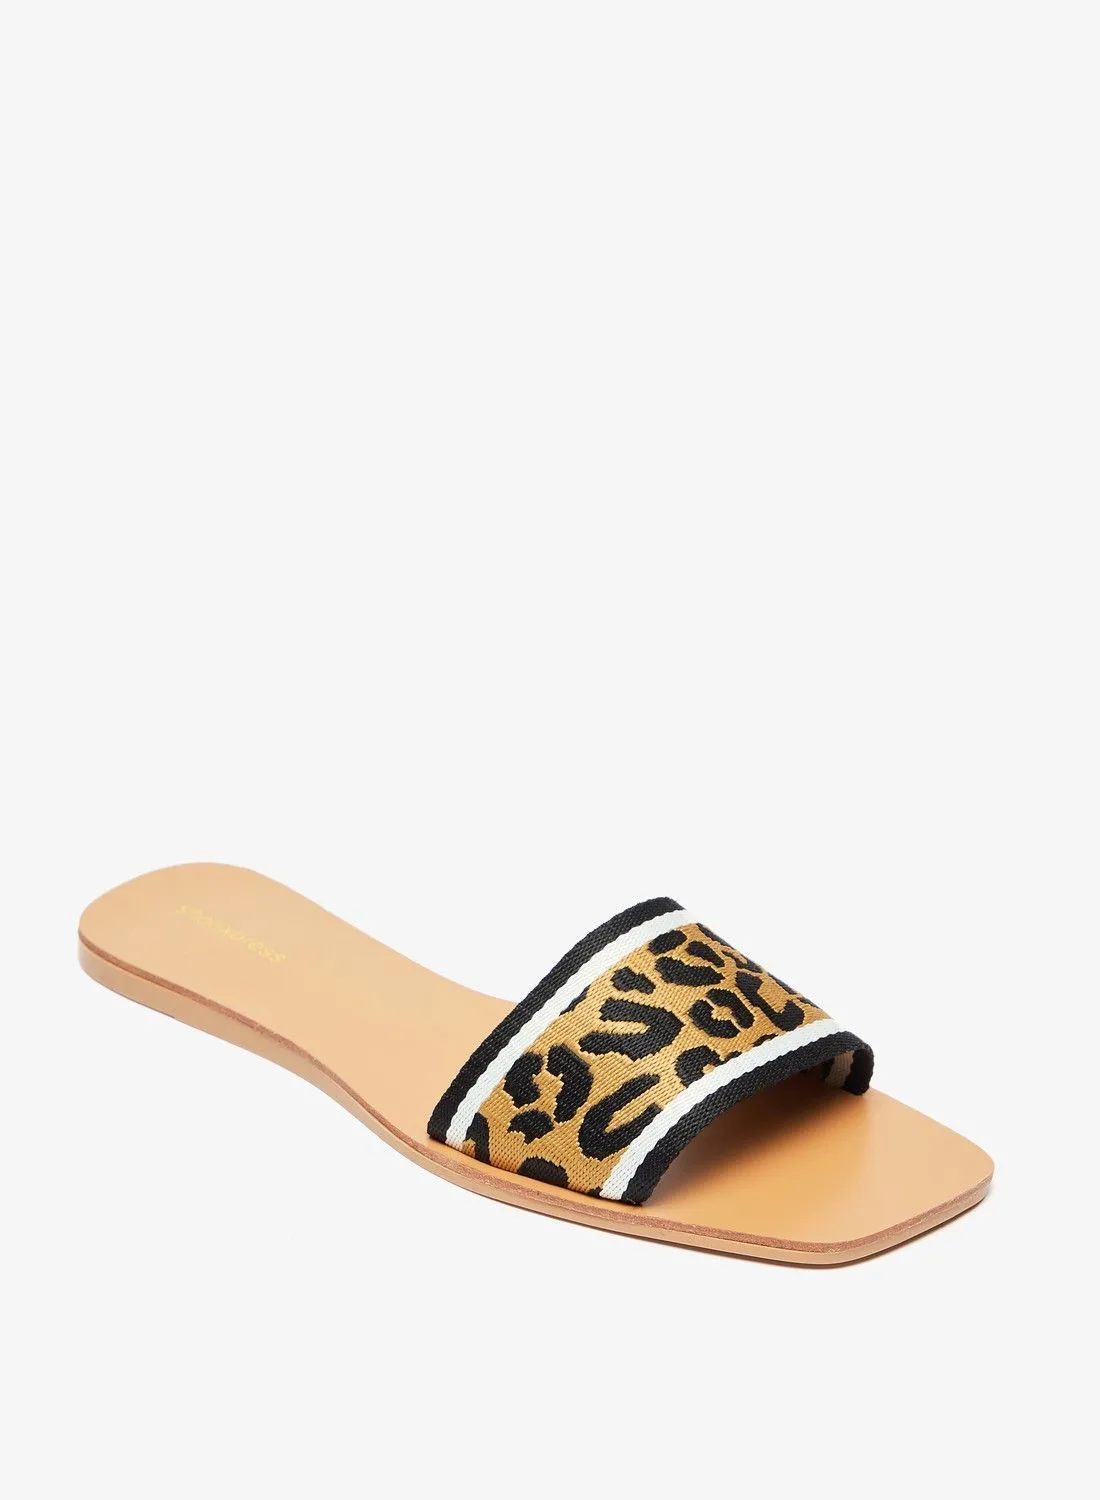 shoexpress Leopard Print Slip-On Slide Sandals